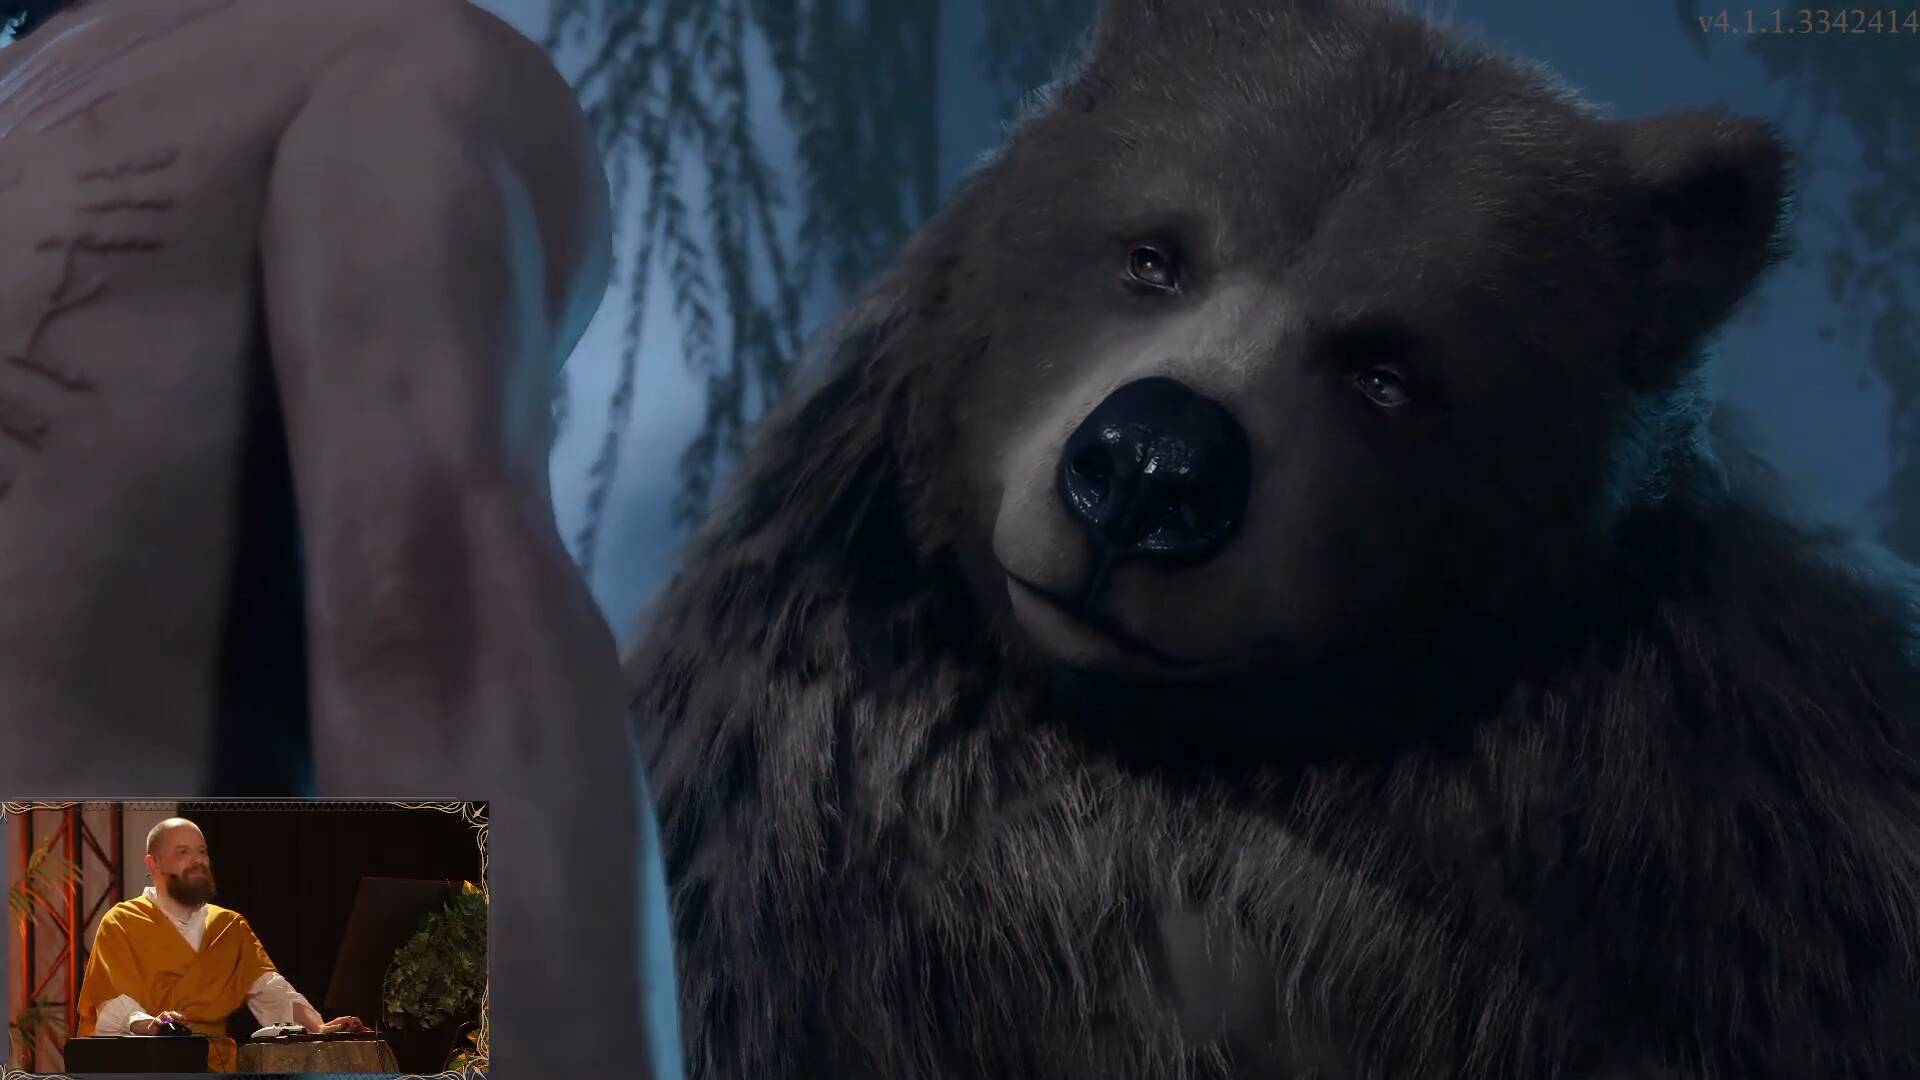 Part Iii Baldurs Gate 3 Bear Sex And Loading Screen Mystery Wylsacom Gamingdeputy